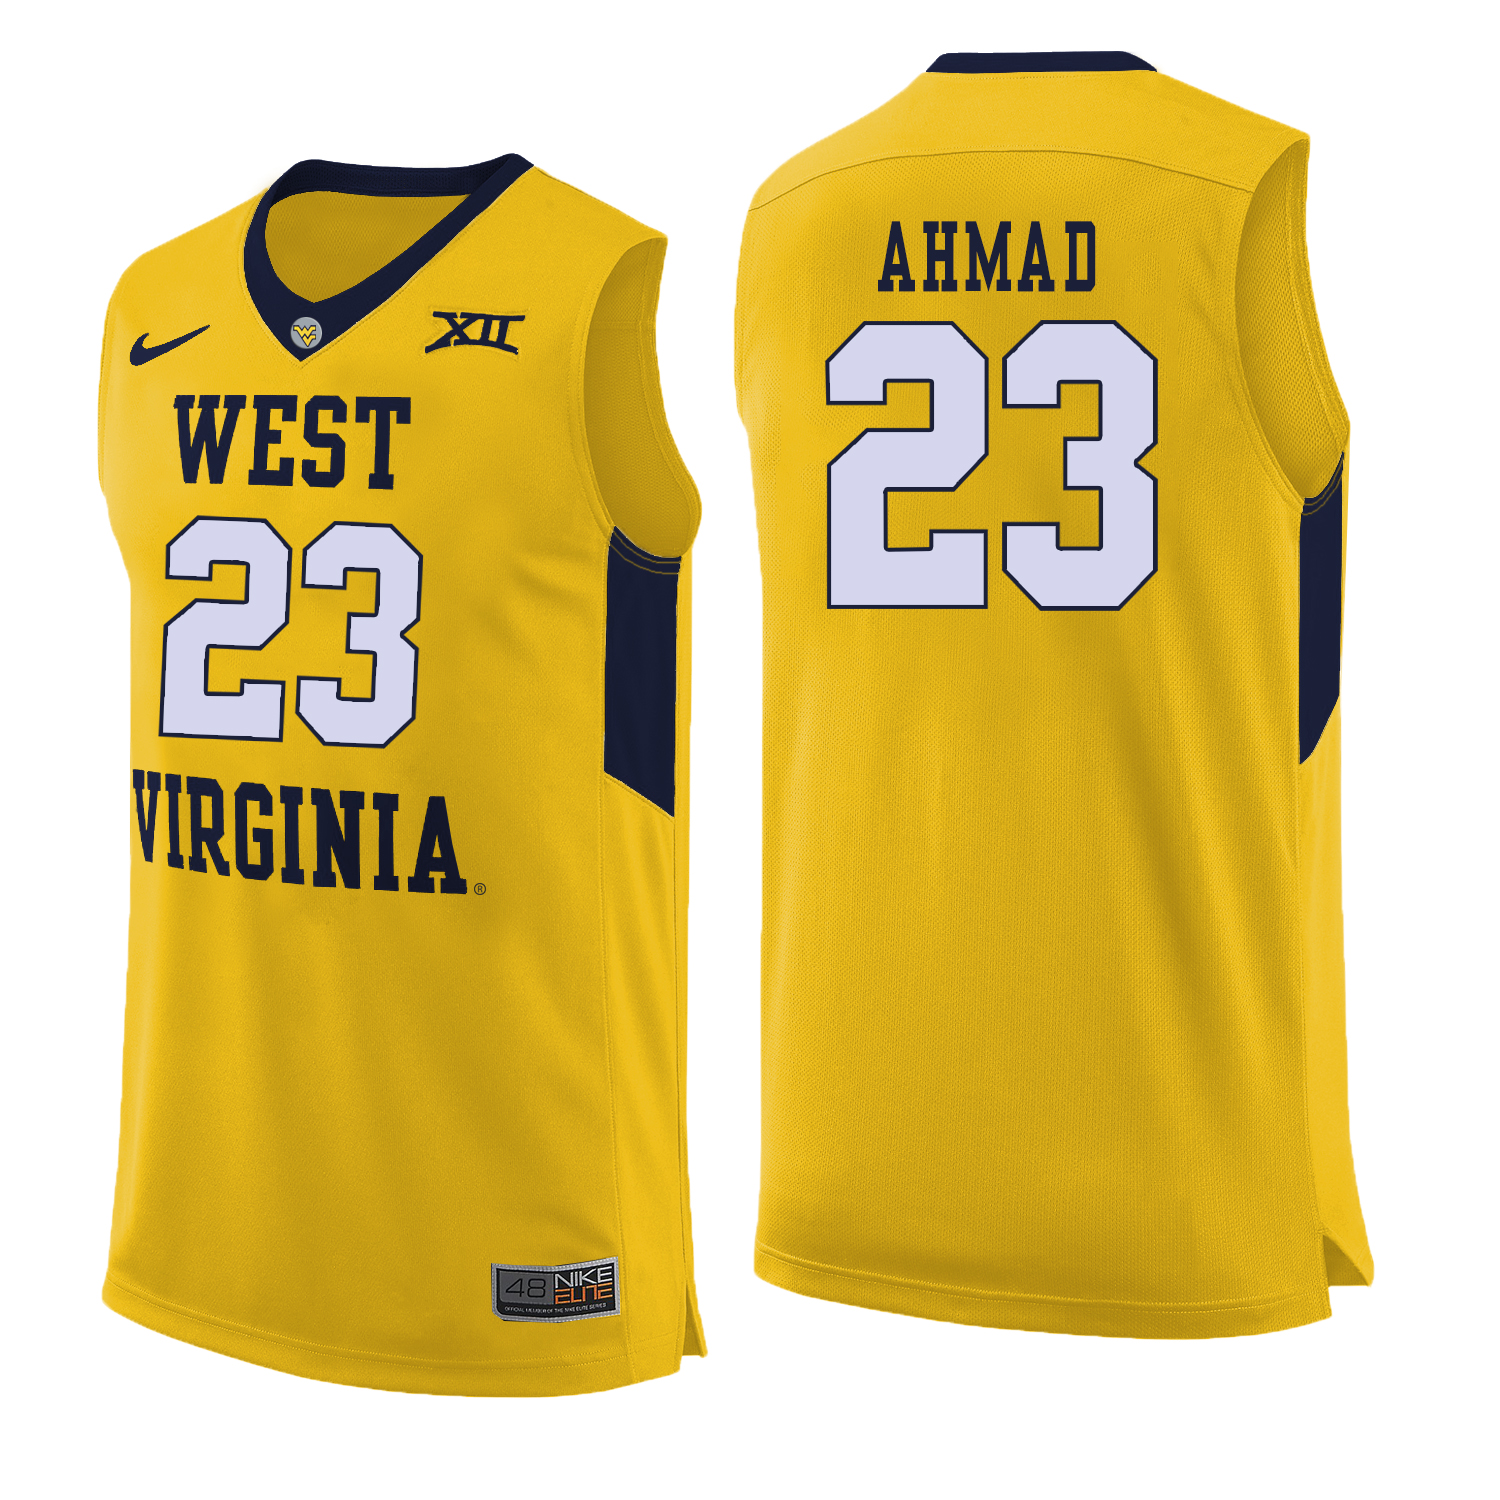 West Virginia Mountaineers 23 Esa Ahmad Yellow College Basketball Jersey